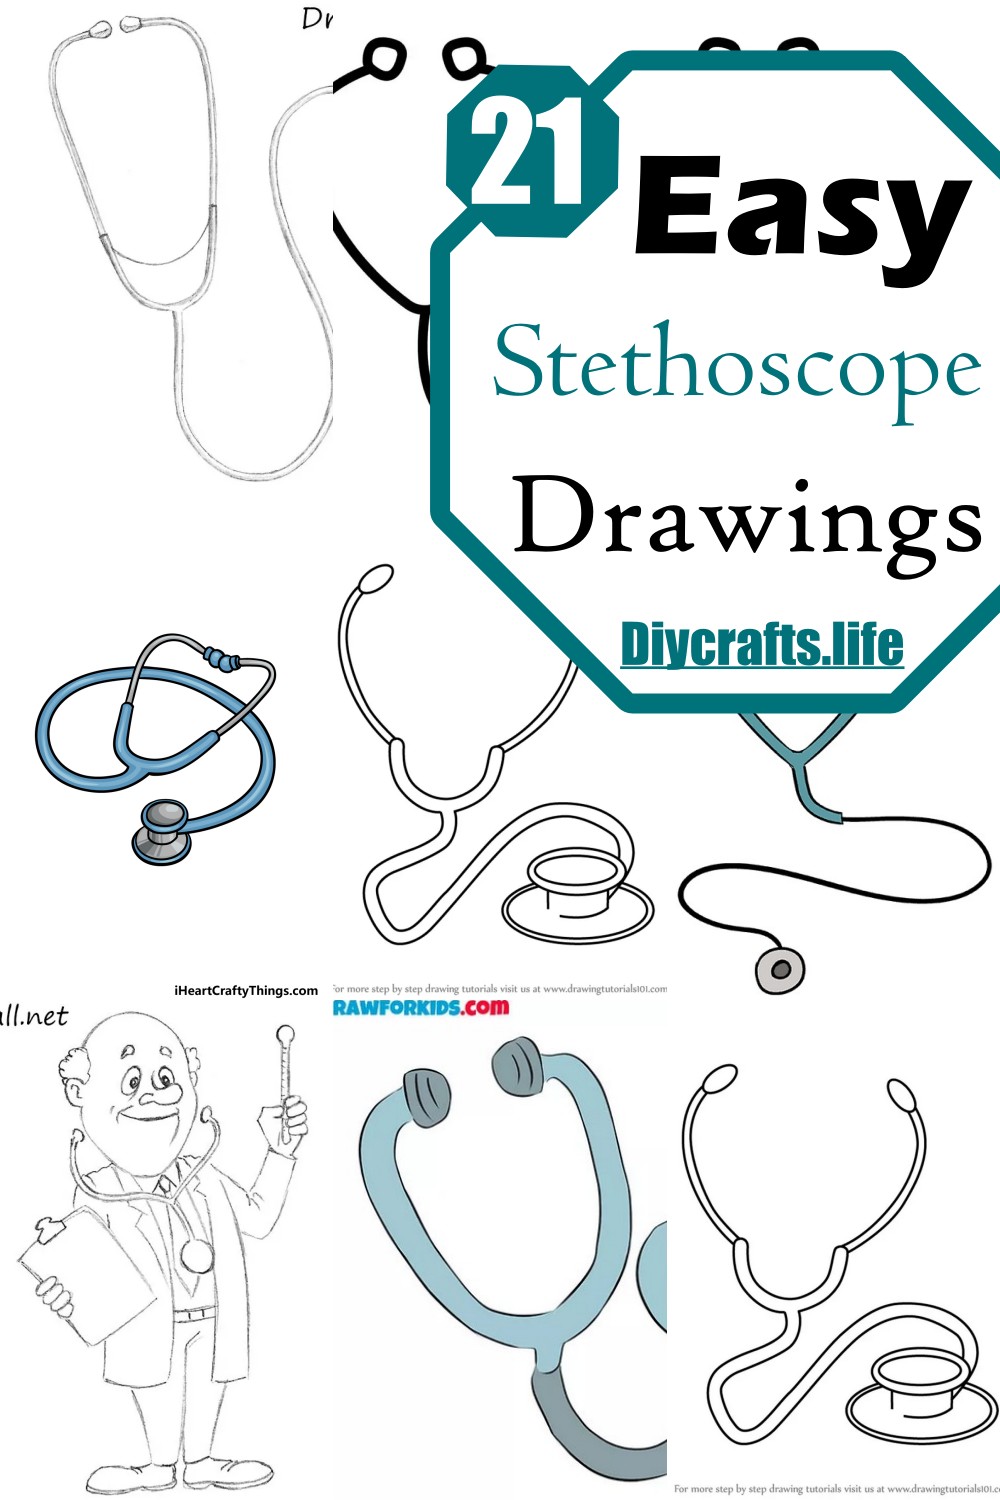 Easy Stethoscope Drawings